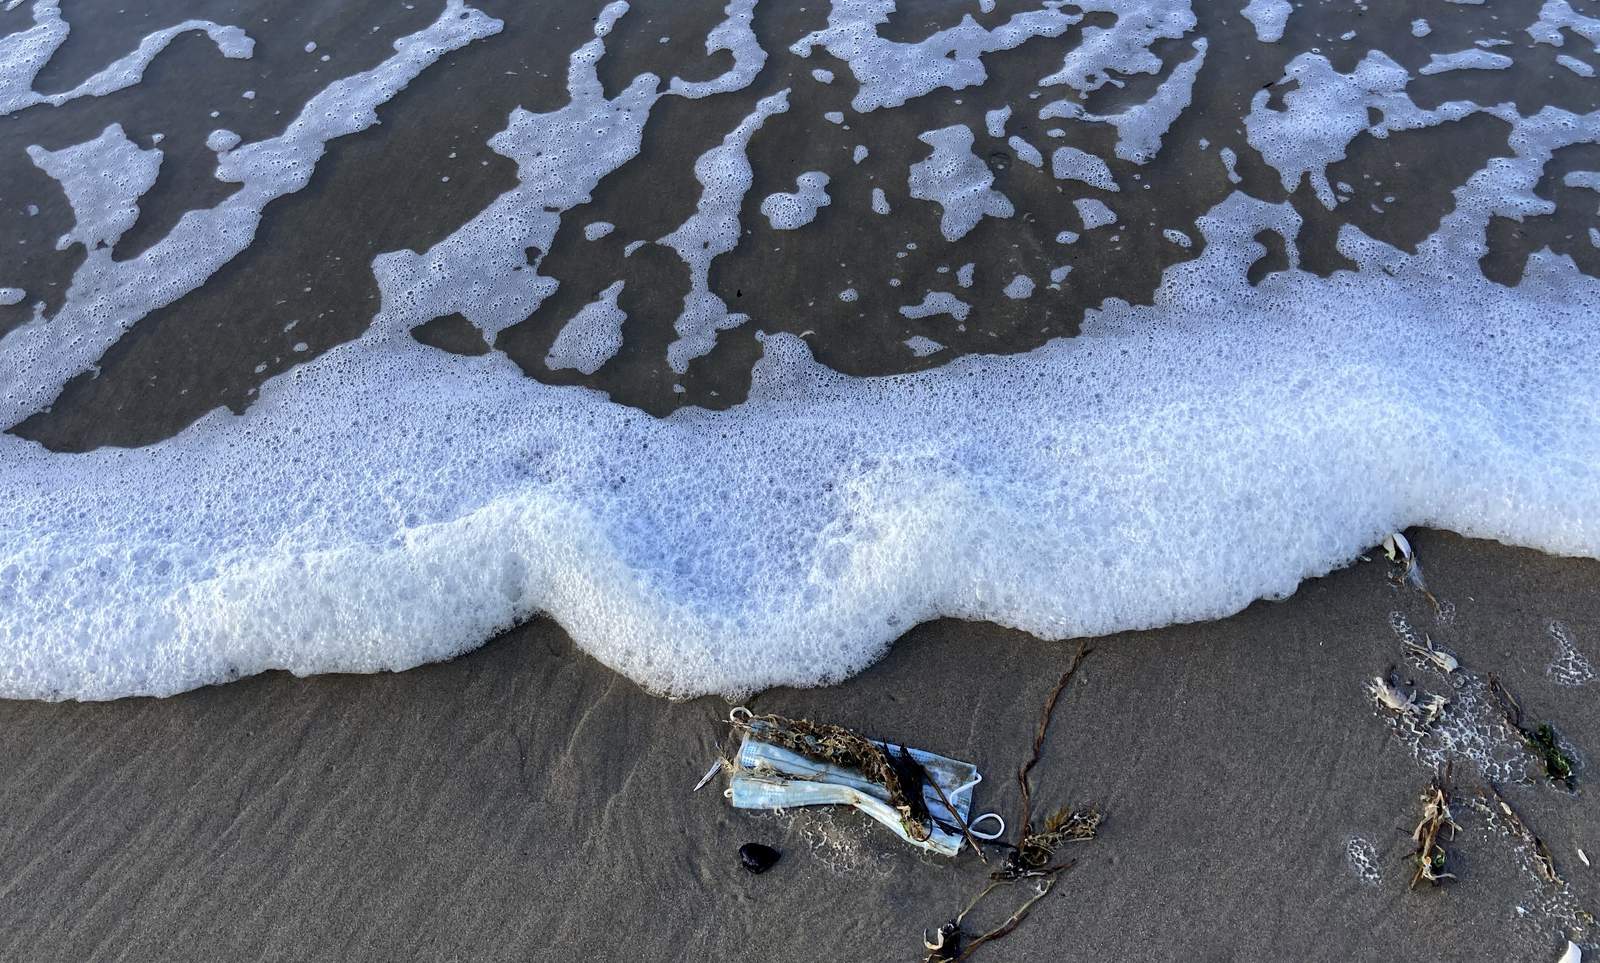 Discarded masks litter beaches worldwide, threaten sea life